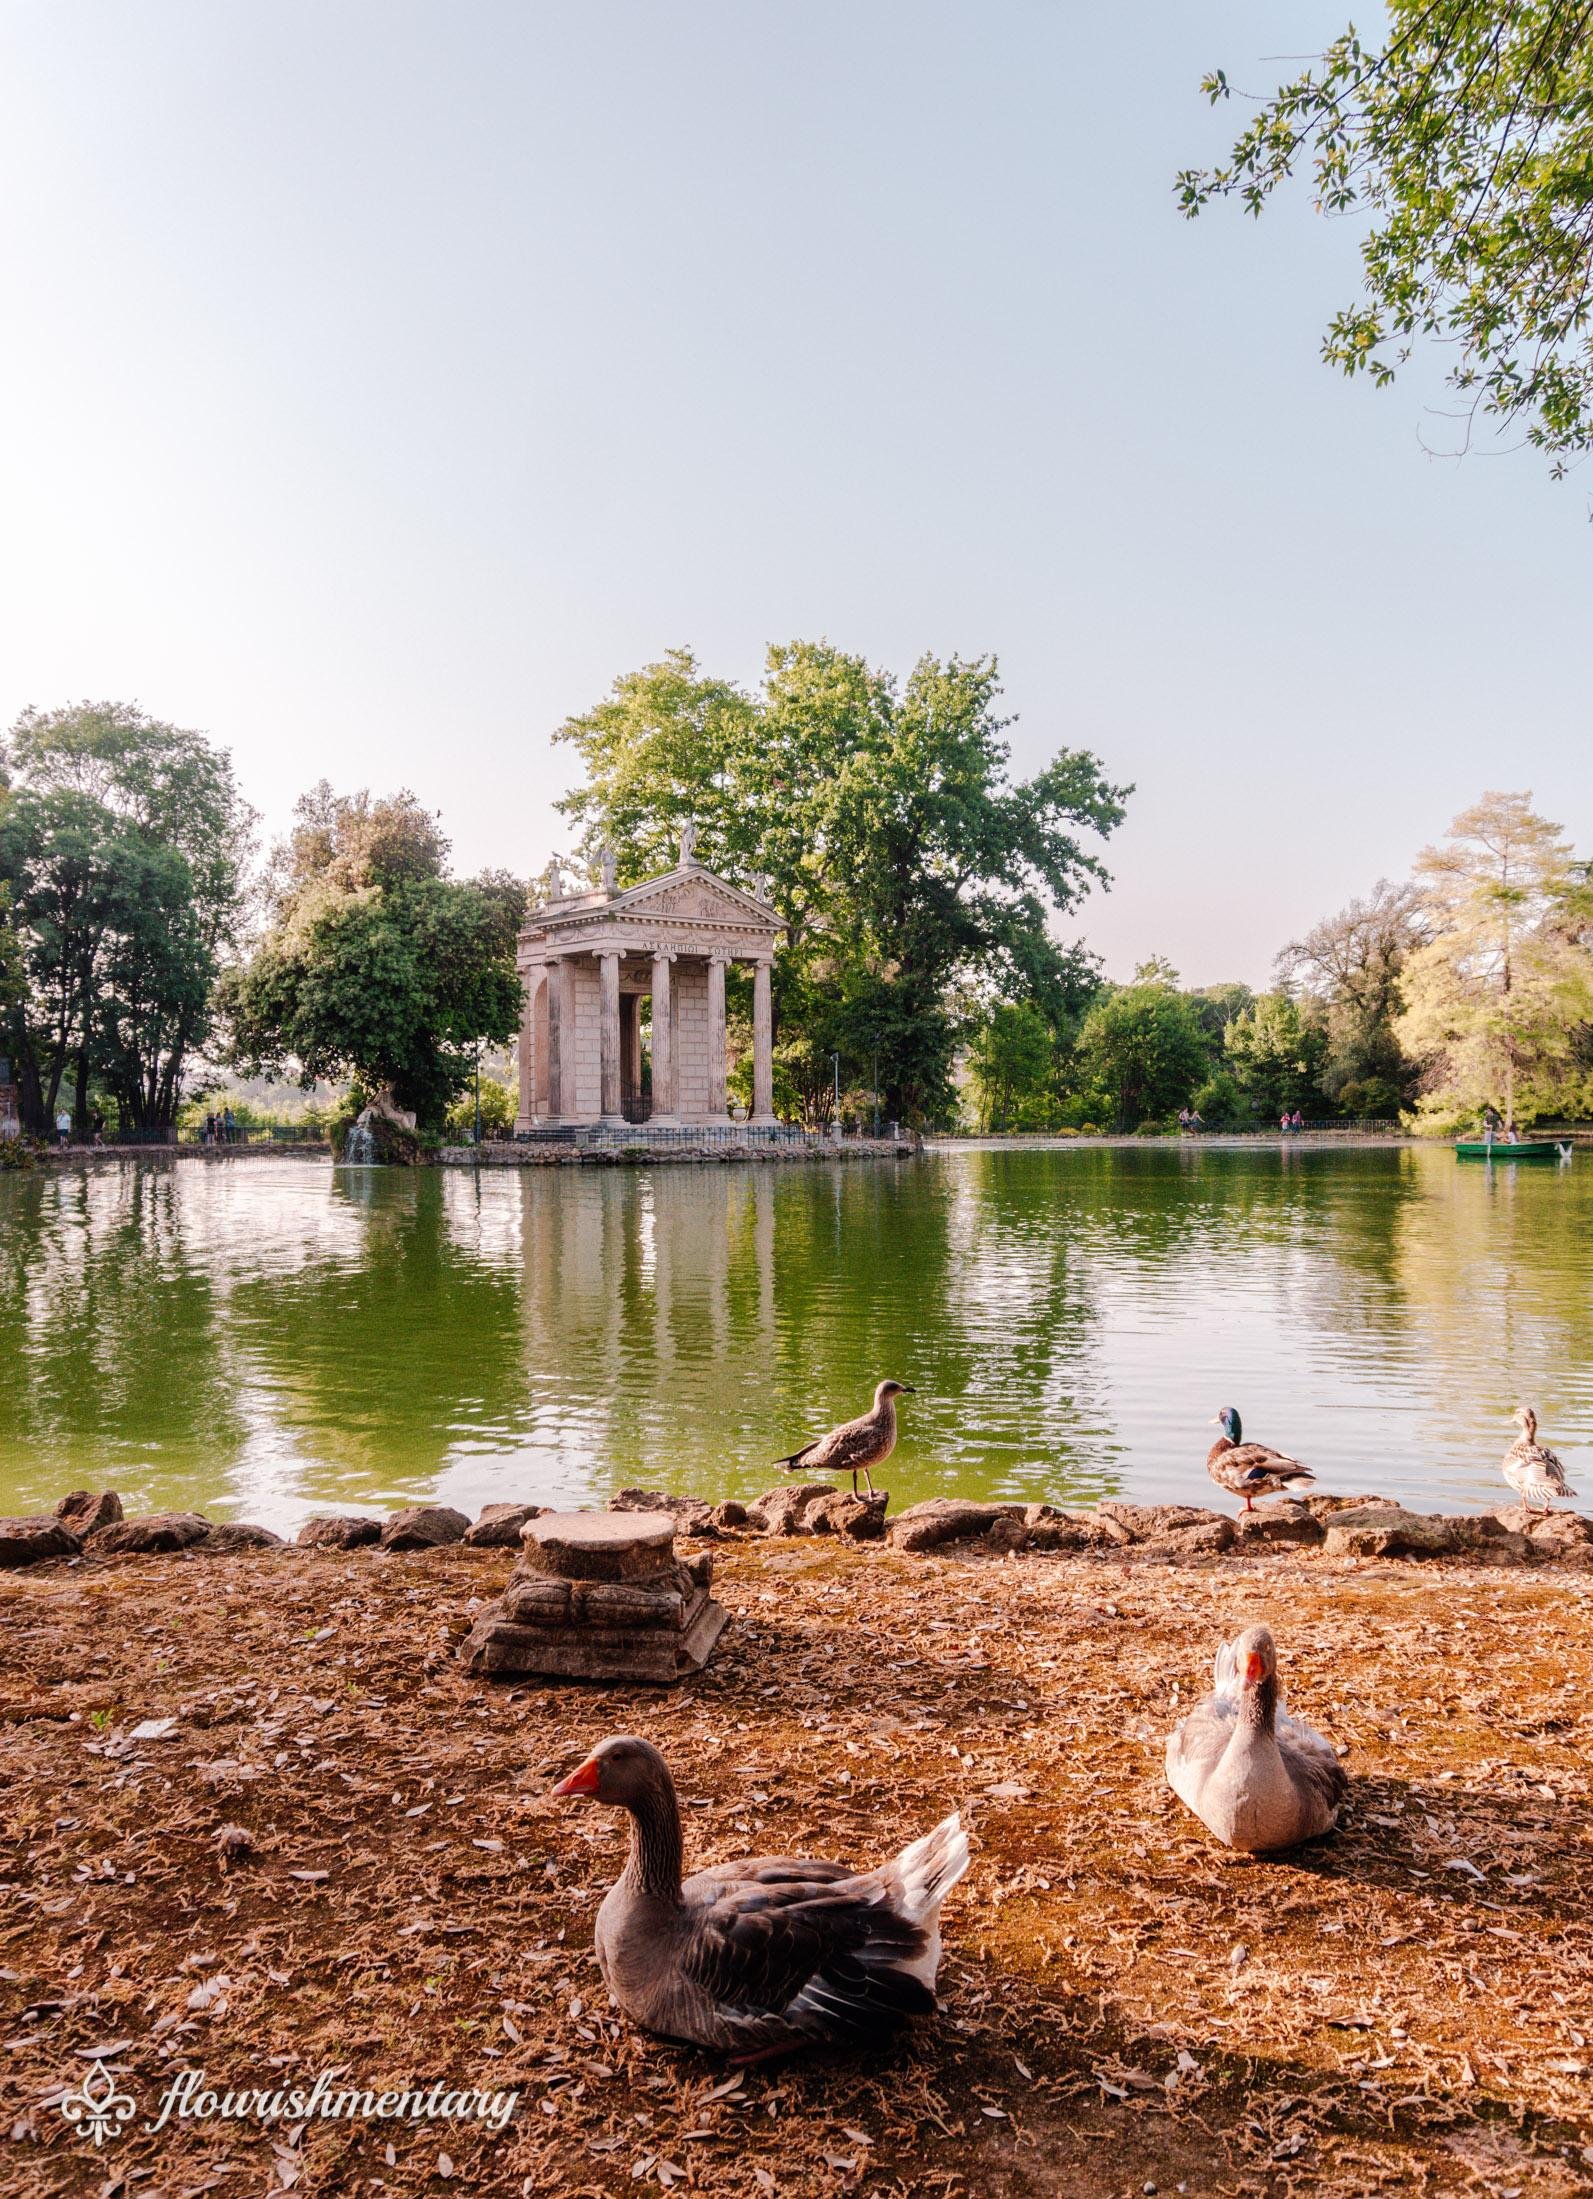 ducks Temple of Aesculapius in Villa Borghese Gardens